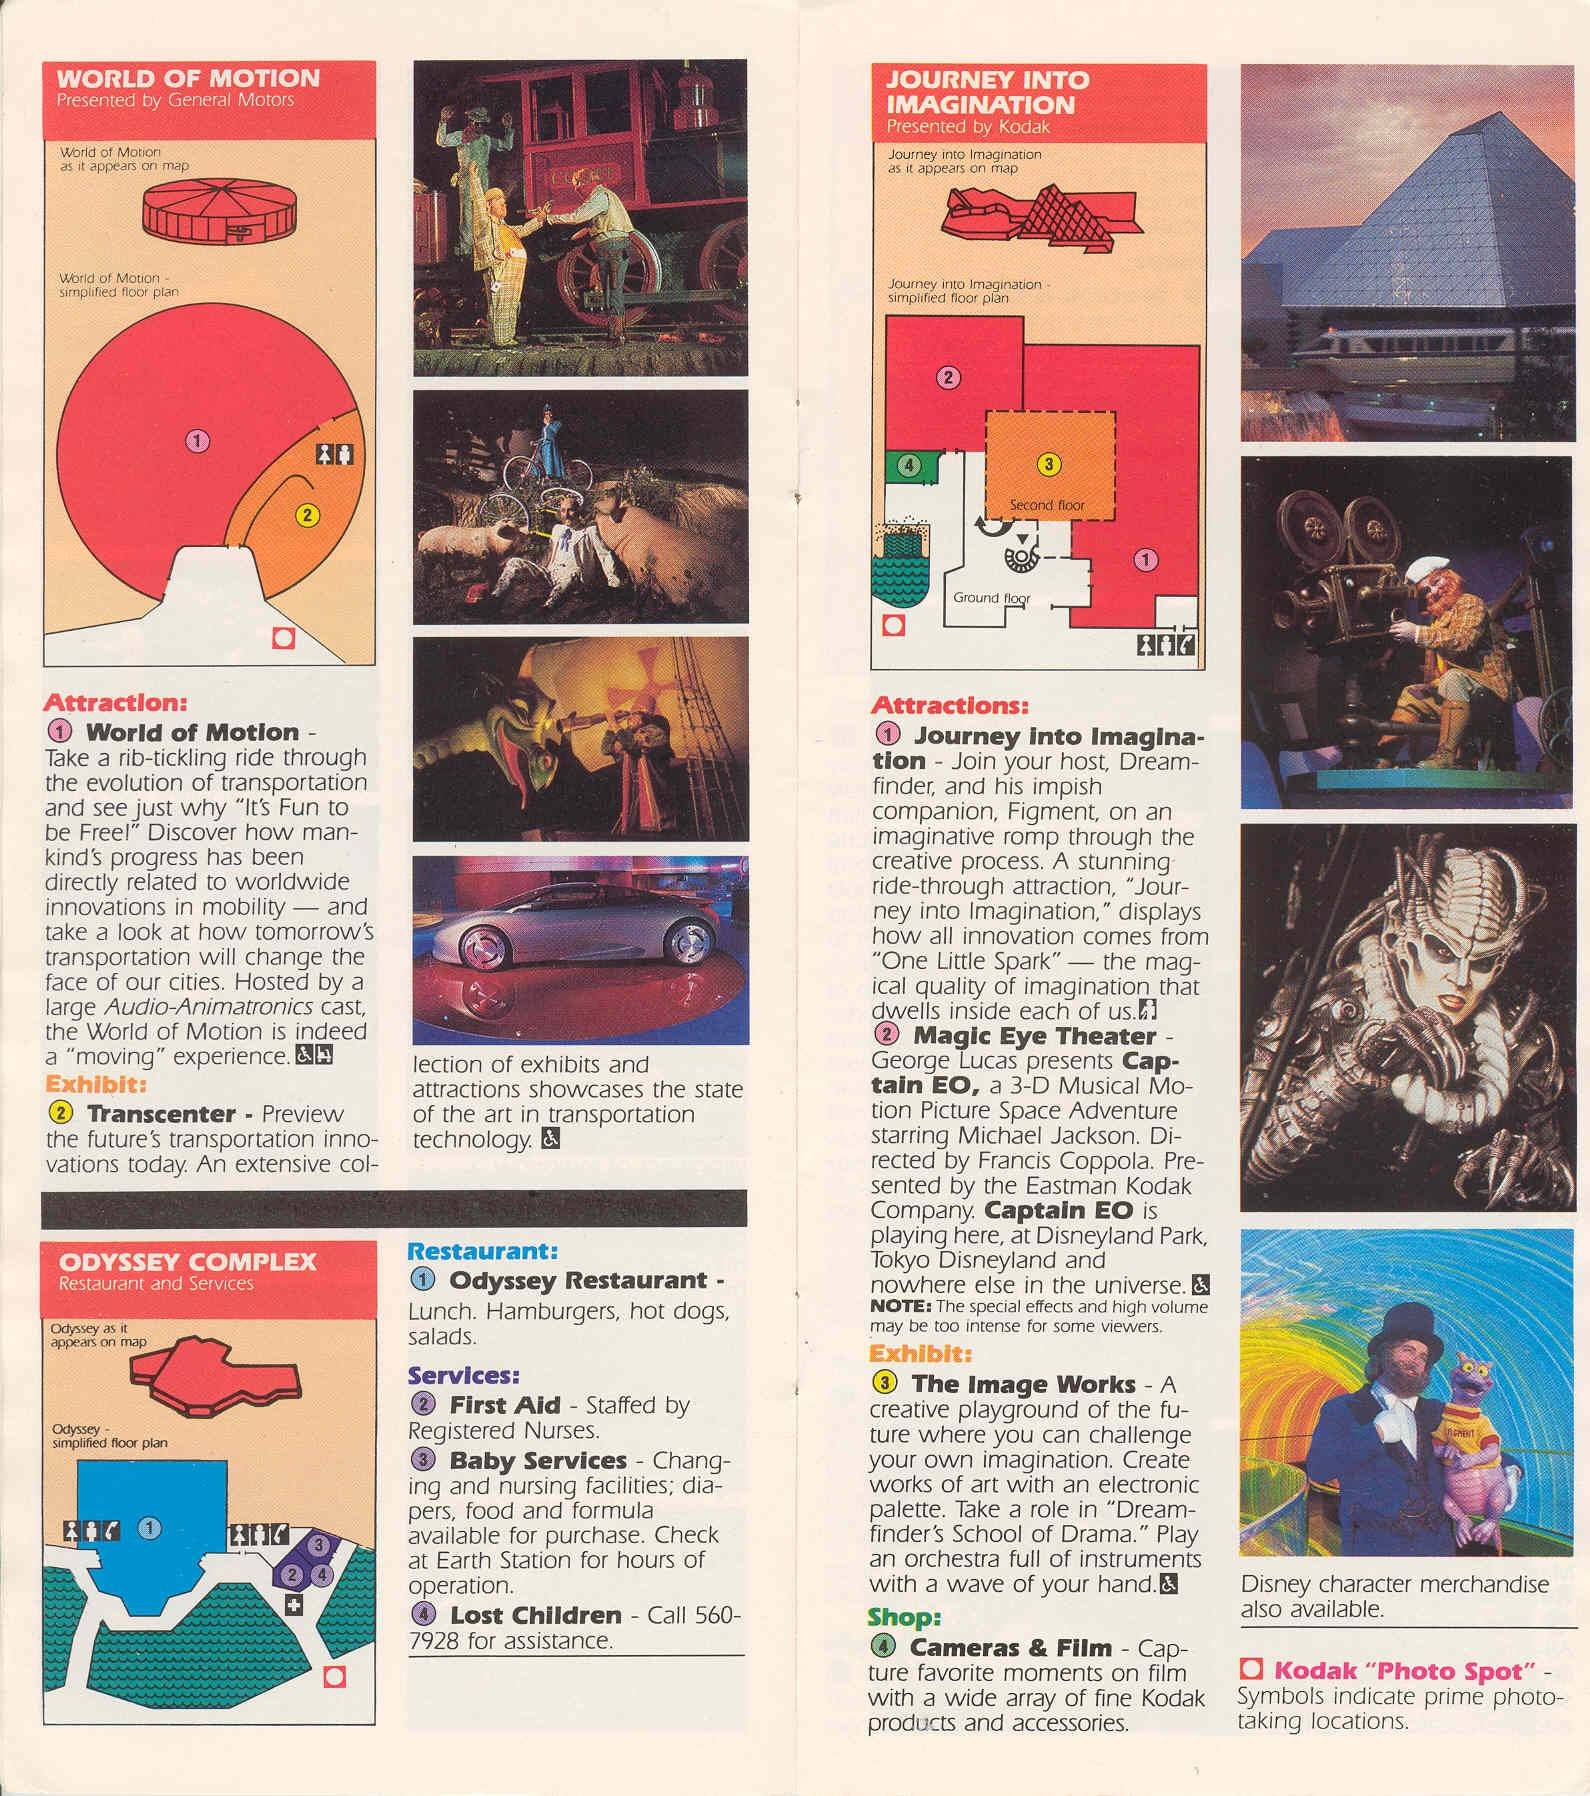 Epcot Center Entertainment Guide 1989